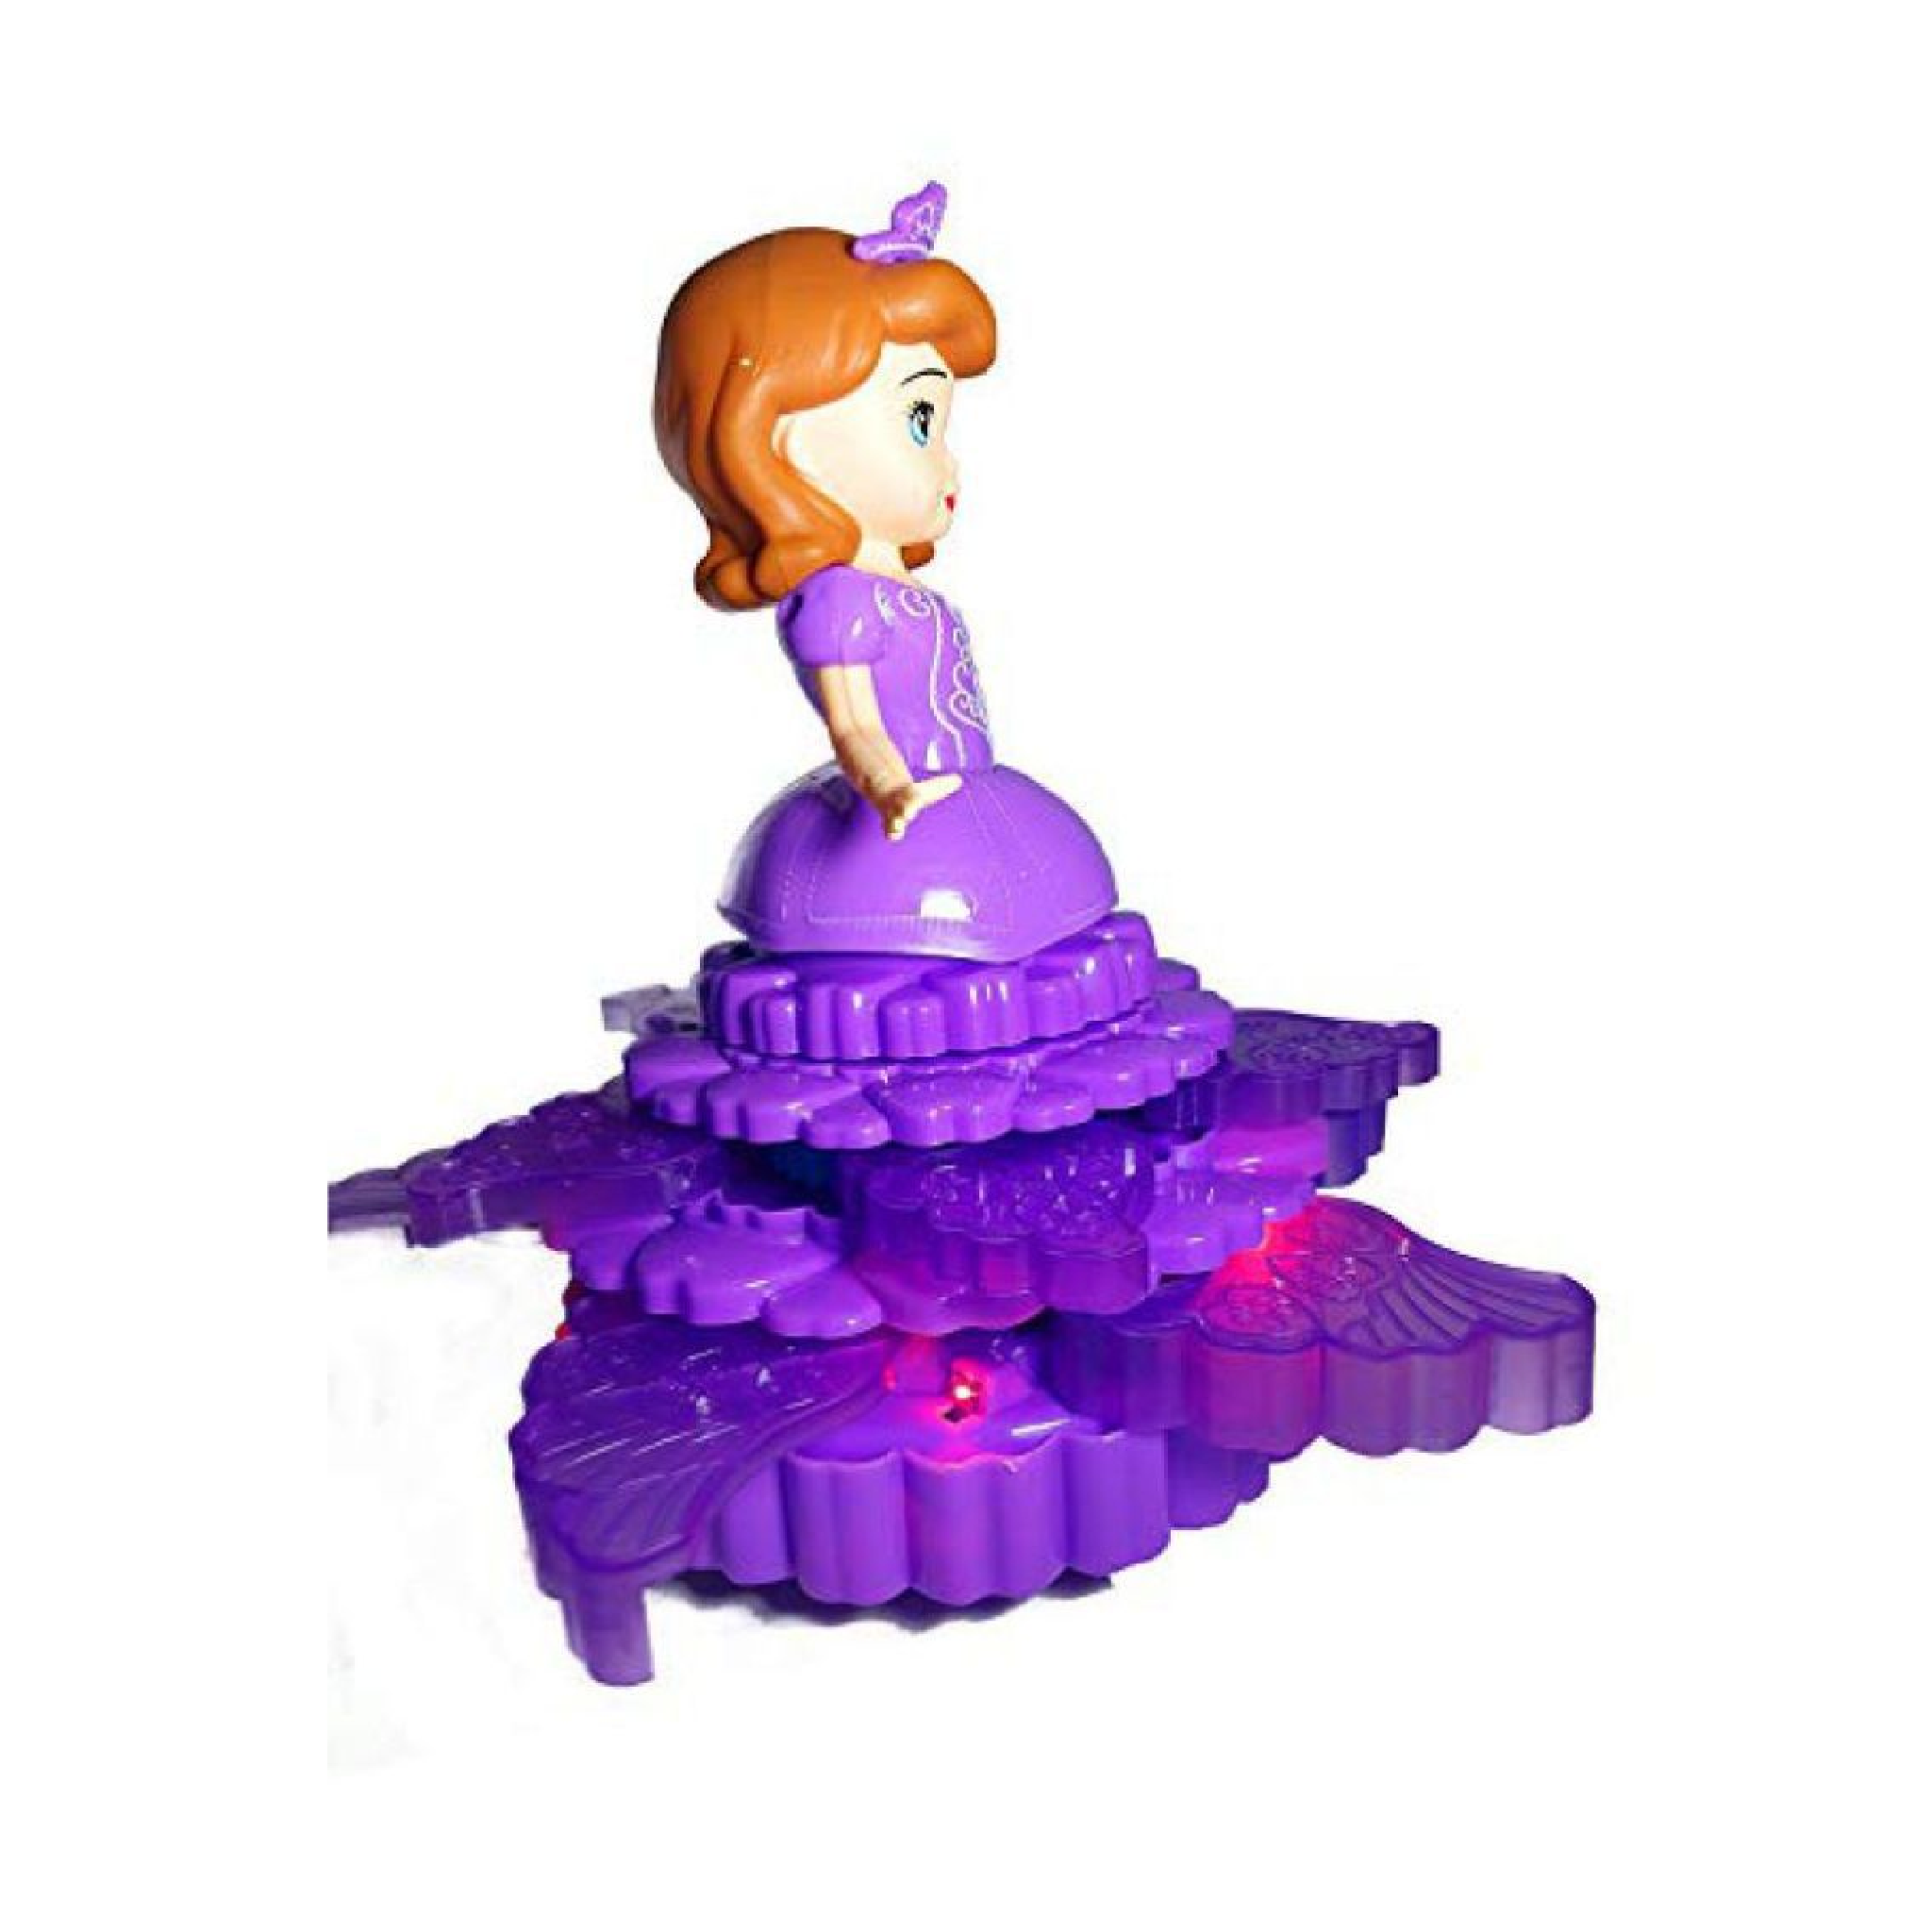 Little Electric Princess 3Dlight 8899-30